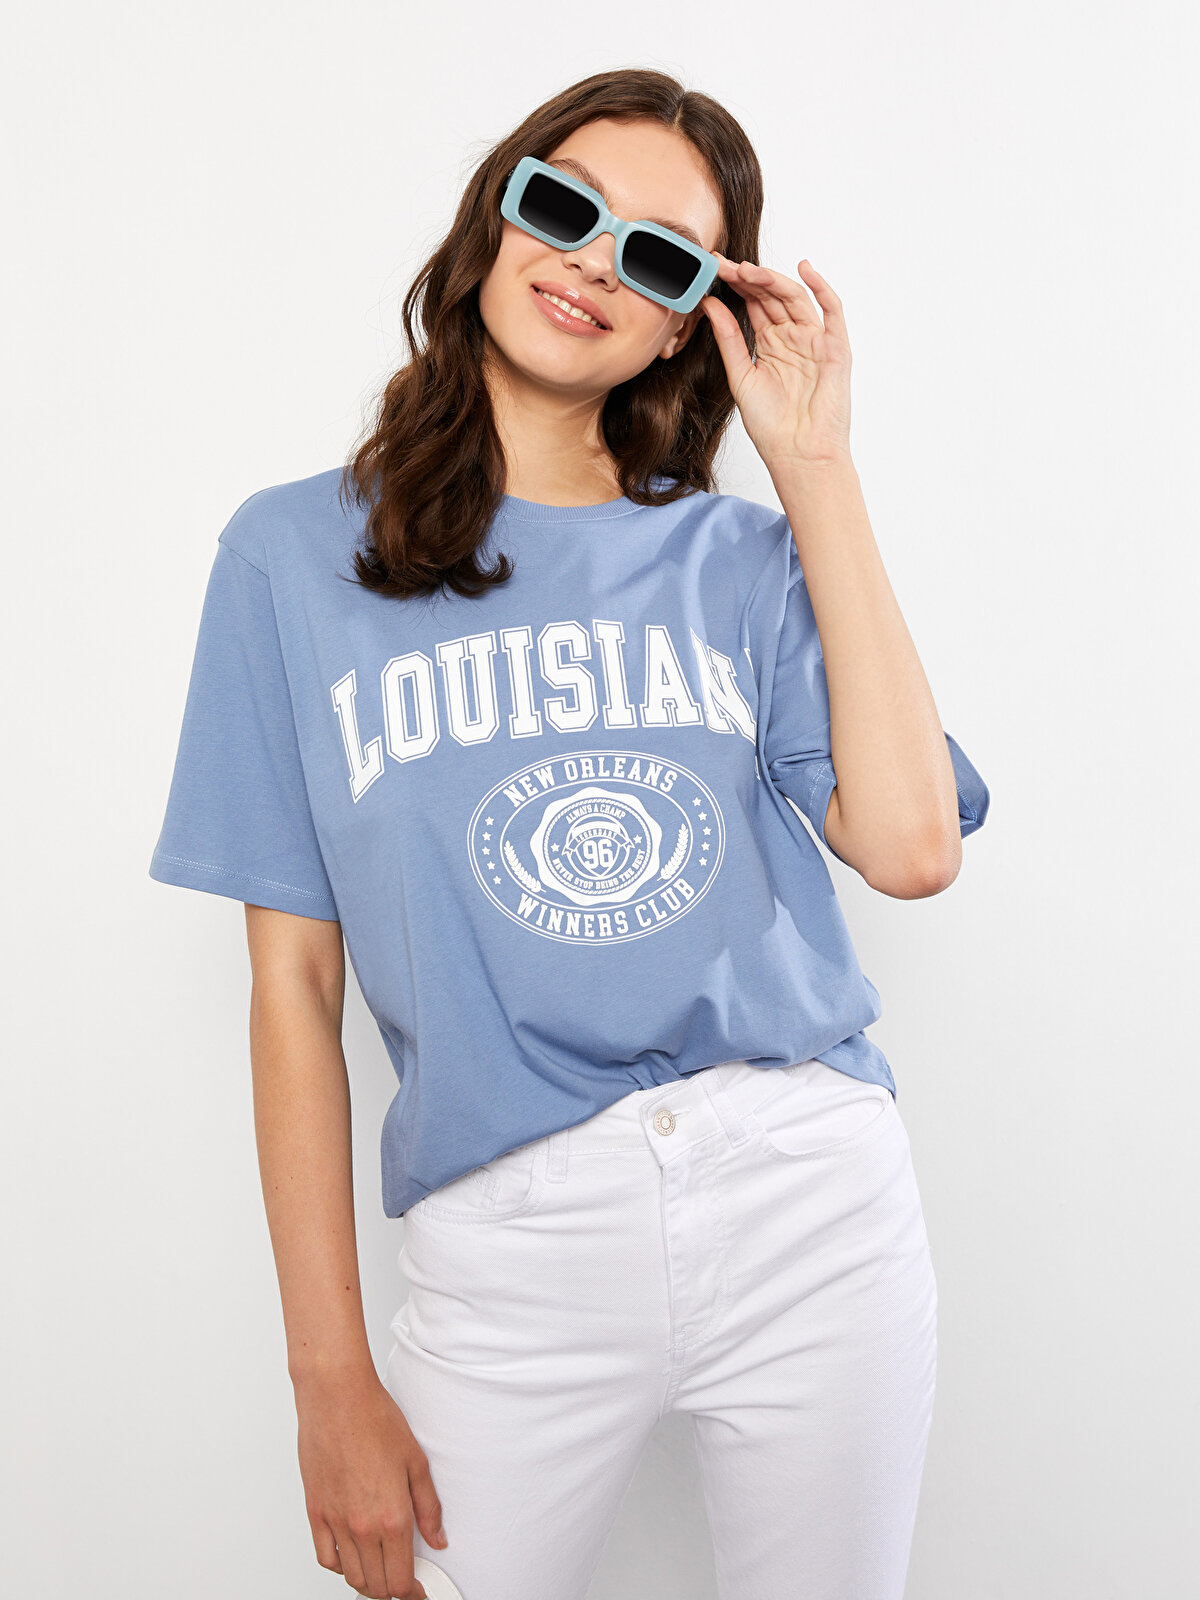 Louisiana - You can take this girl out of Louisi' Men's T-Shirt